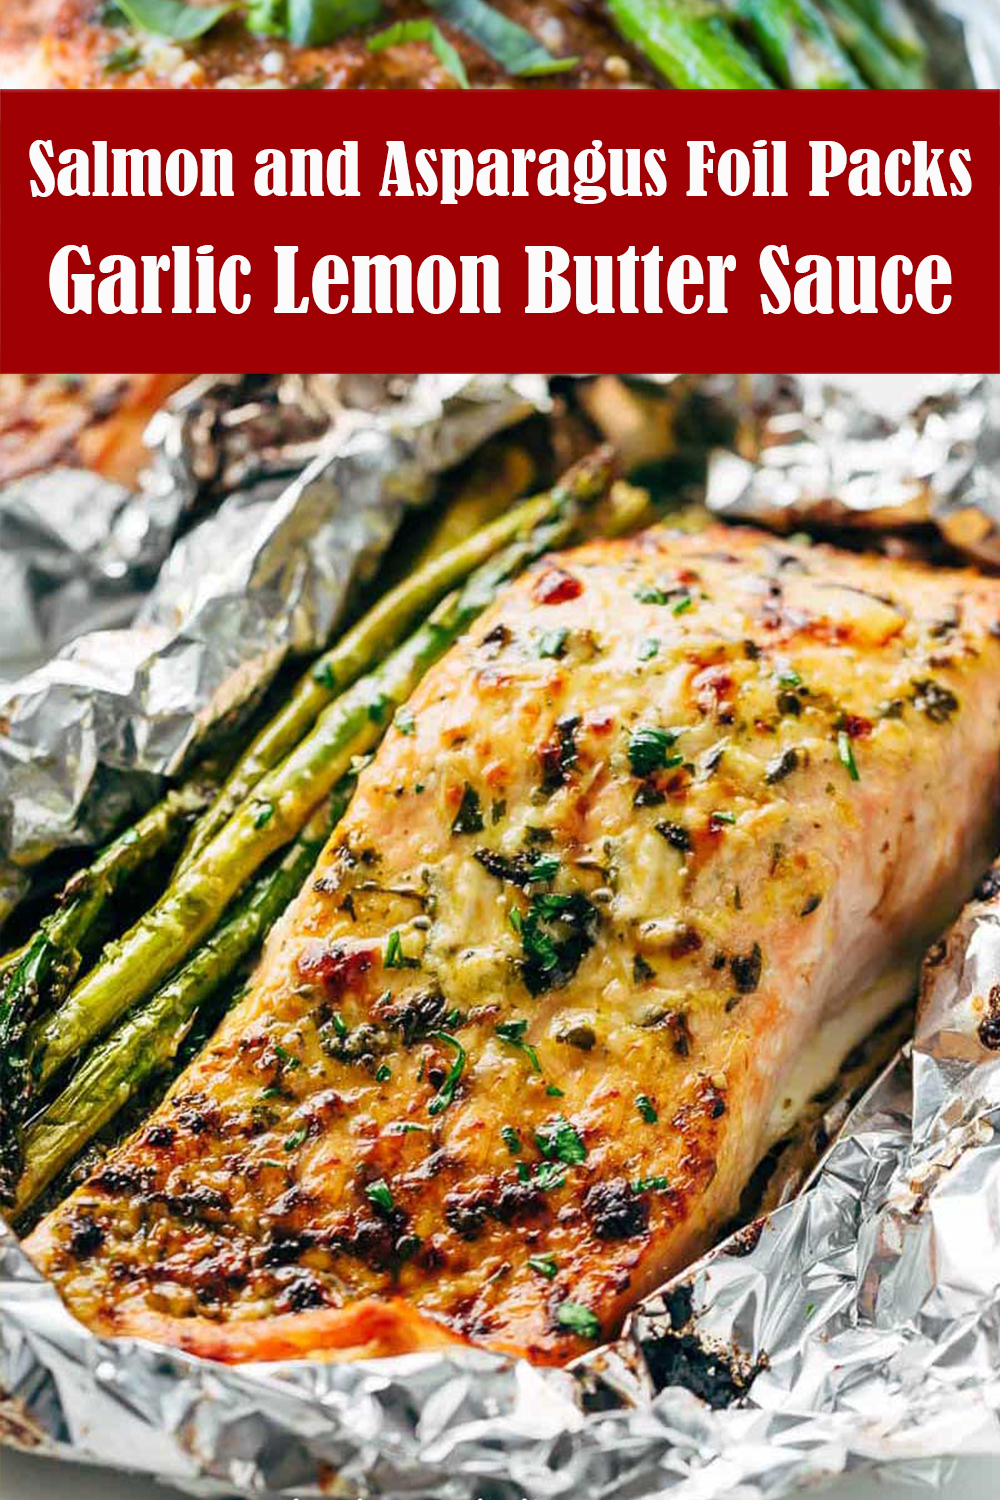 Salmon and Asparagus Foil Packs with Garlic Lemon Butter Sauce